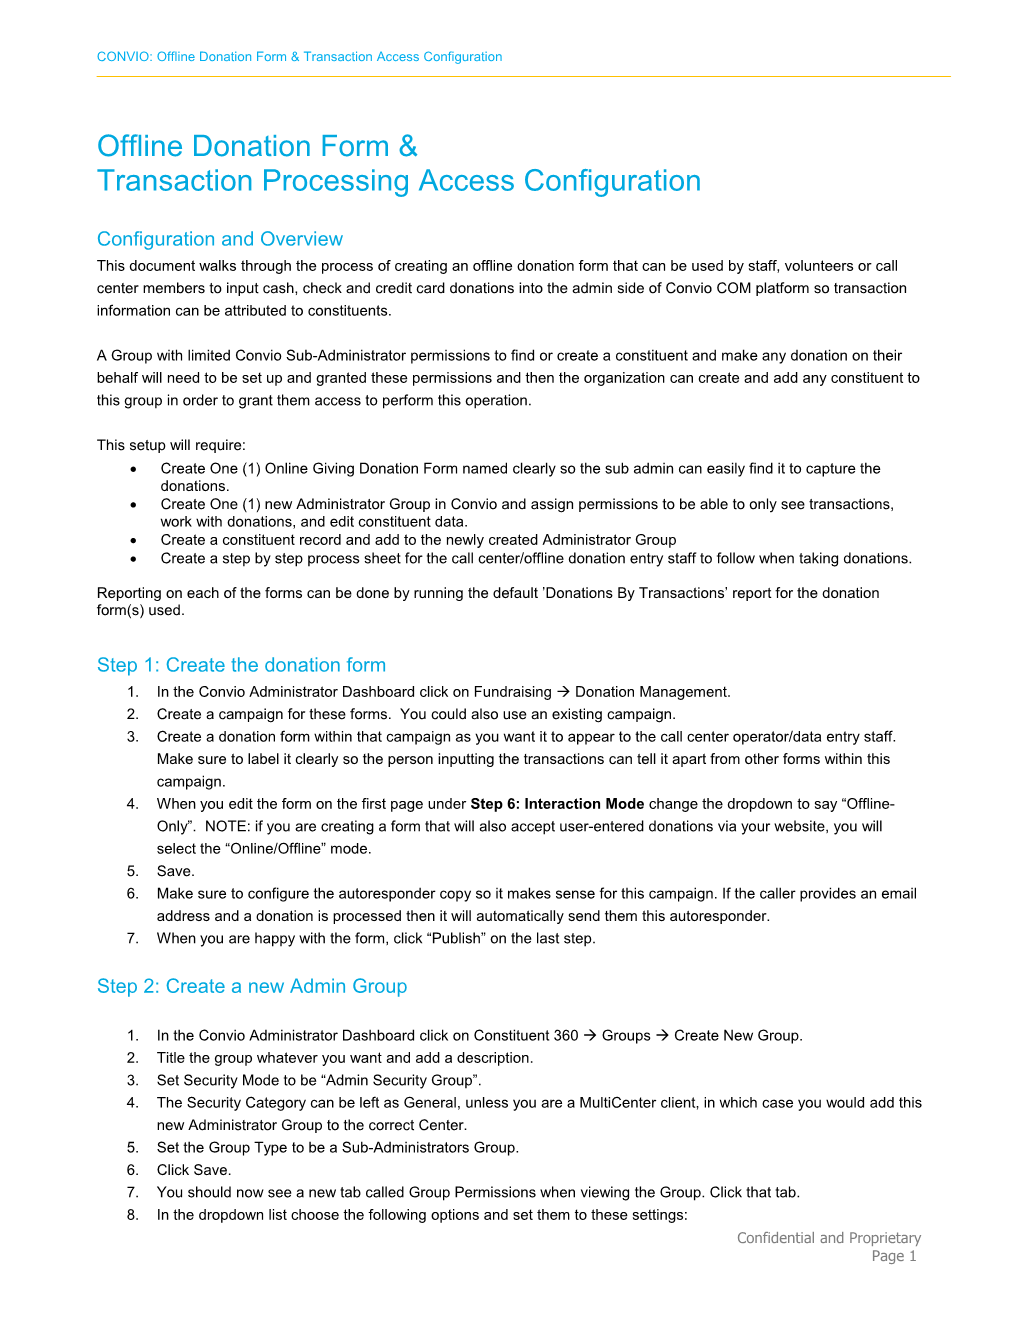 Transaction Processing Access Configuration